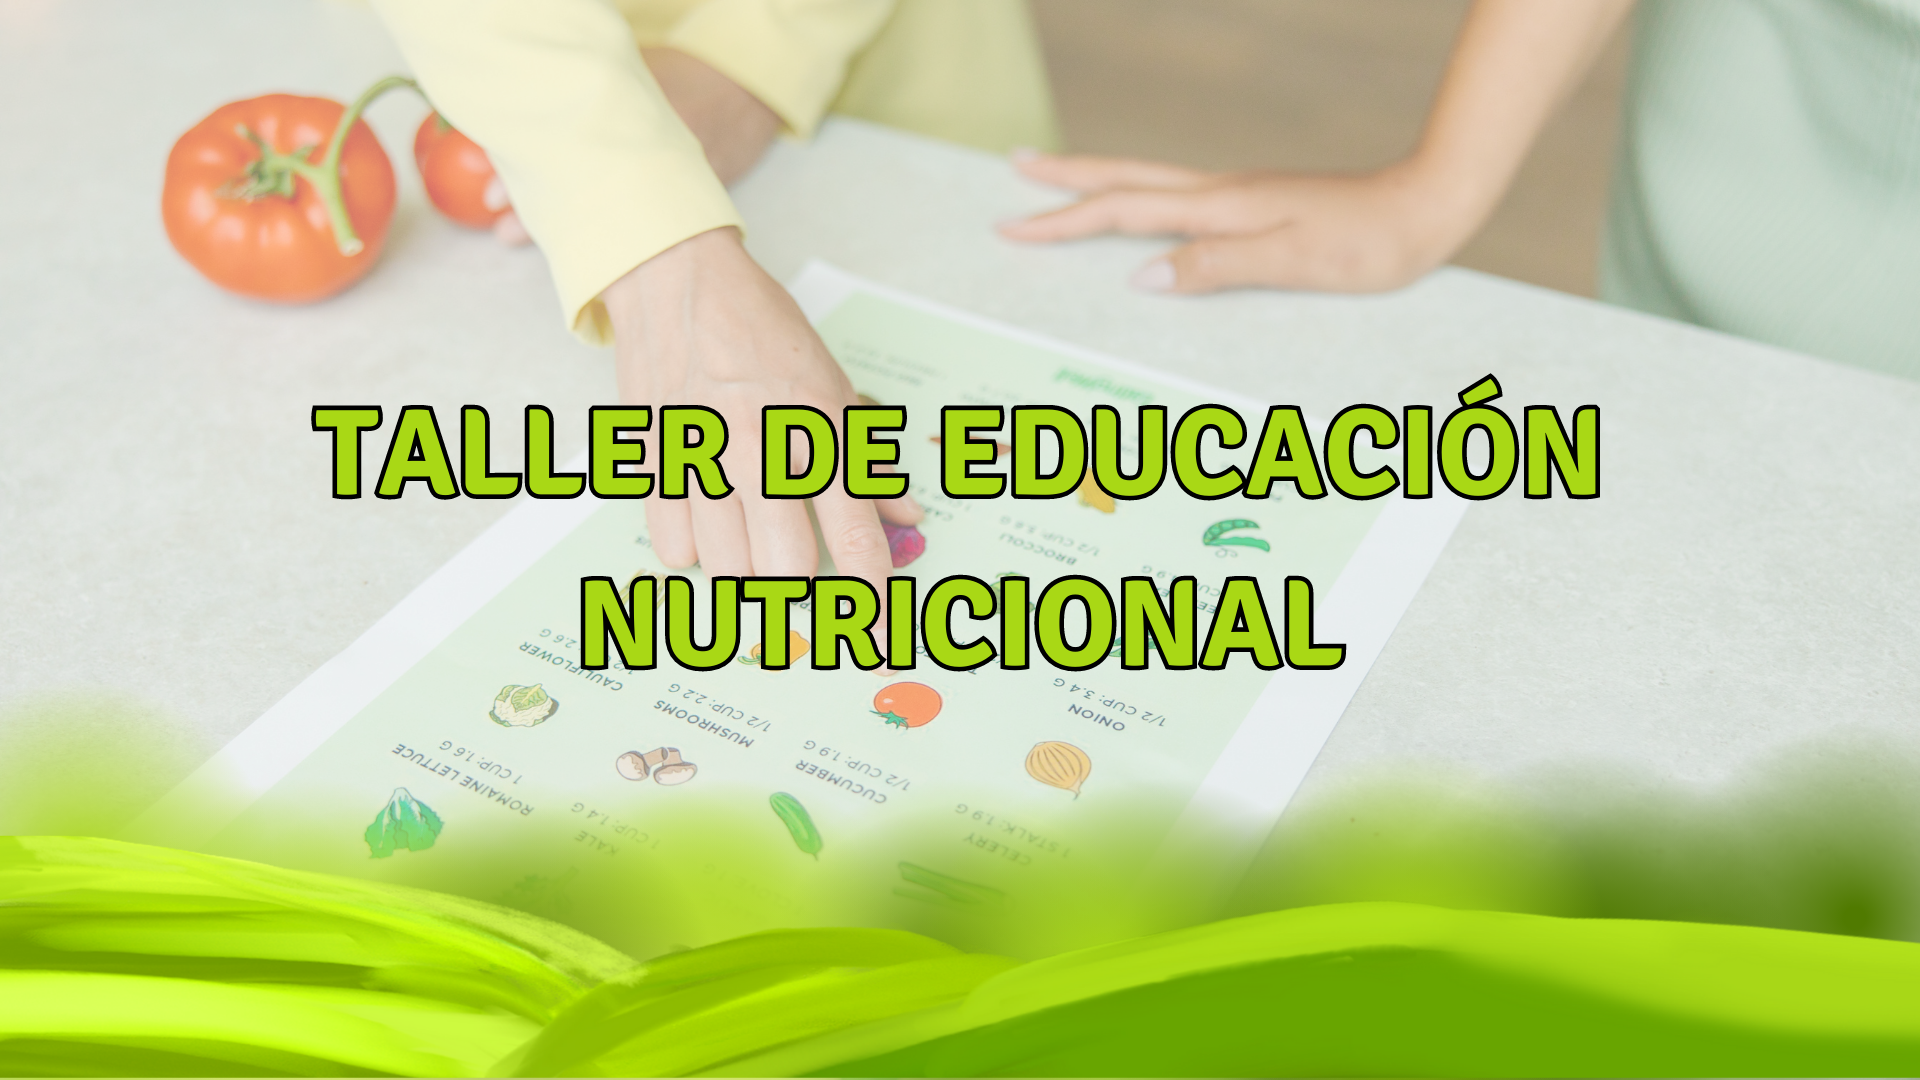 Taller de educación Nutricional.png